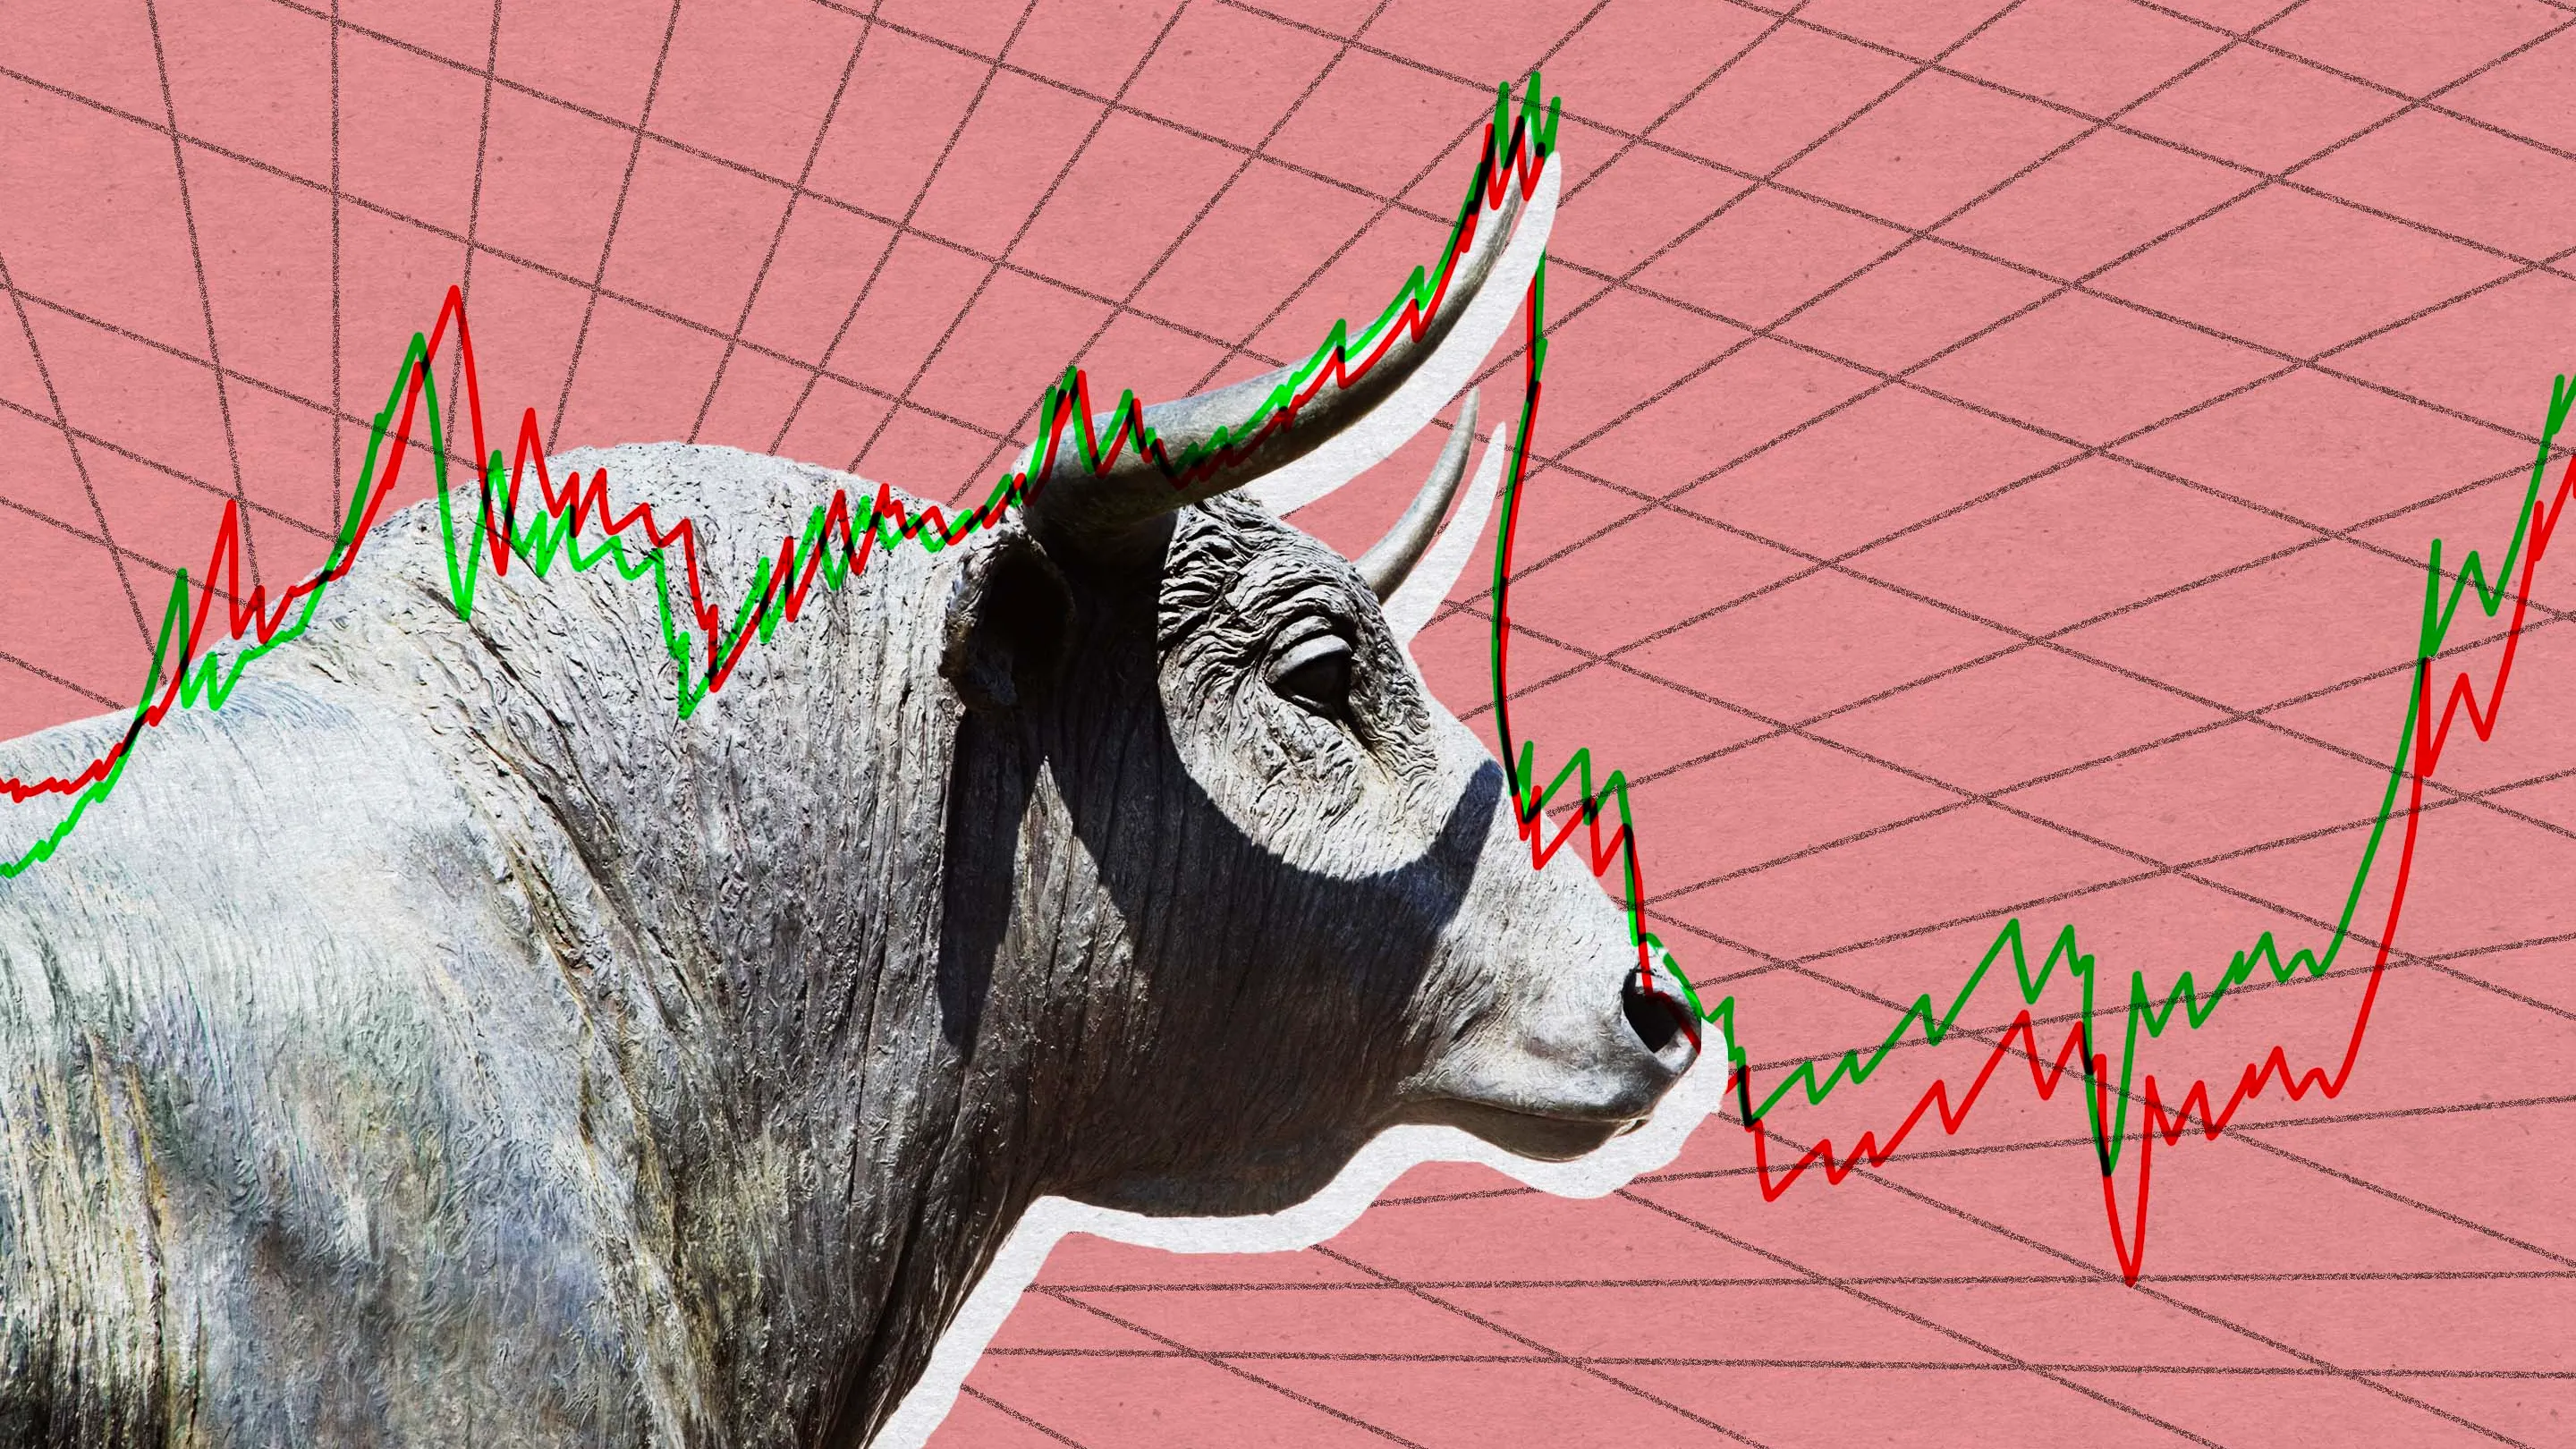 https://img.money.com/2022/09/News-Signs-Stocks-Heading-Bull-Market.jpg?crop=0px%2C169px%2C2880px%2C1620px&quality=85